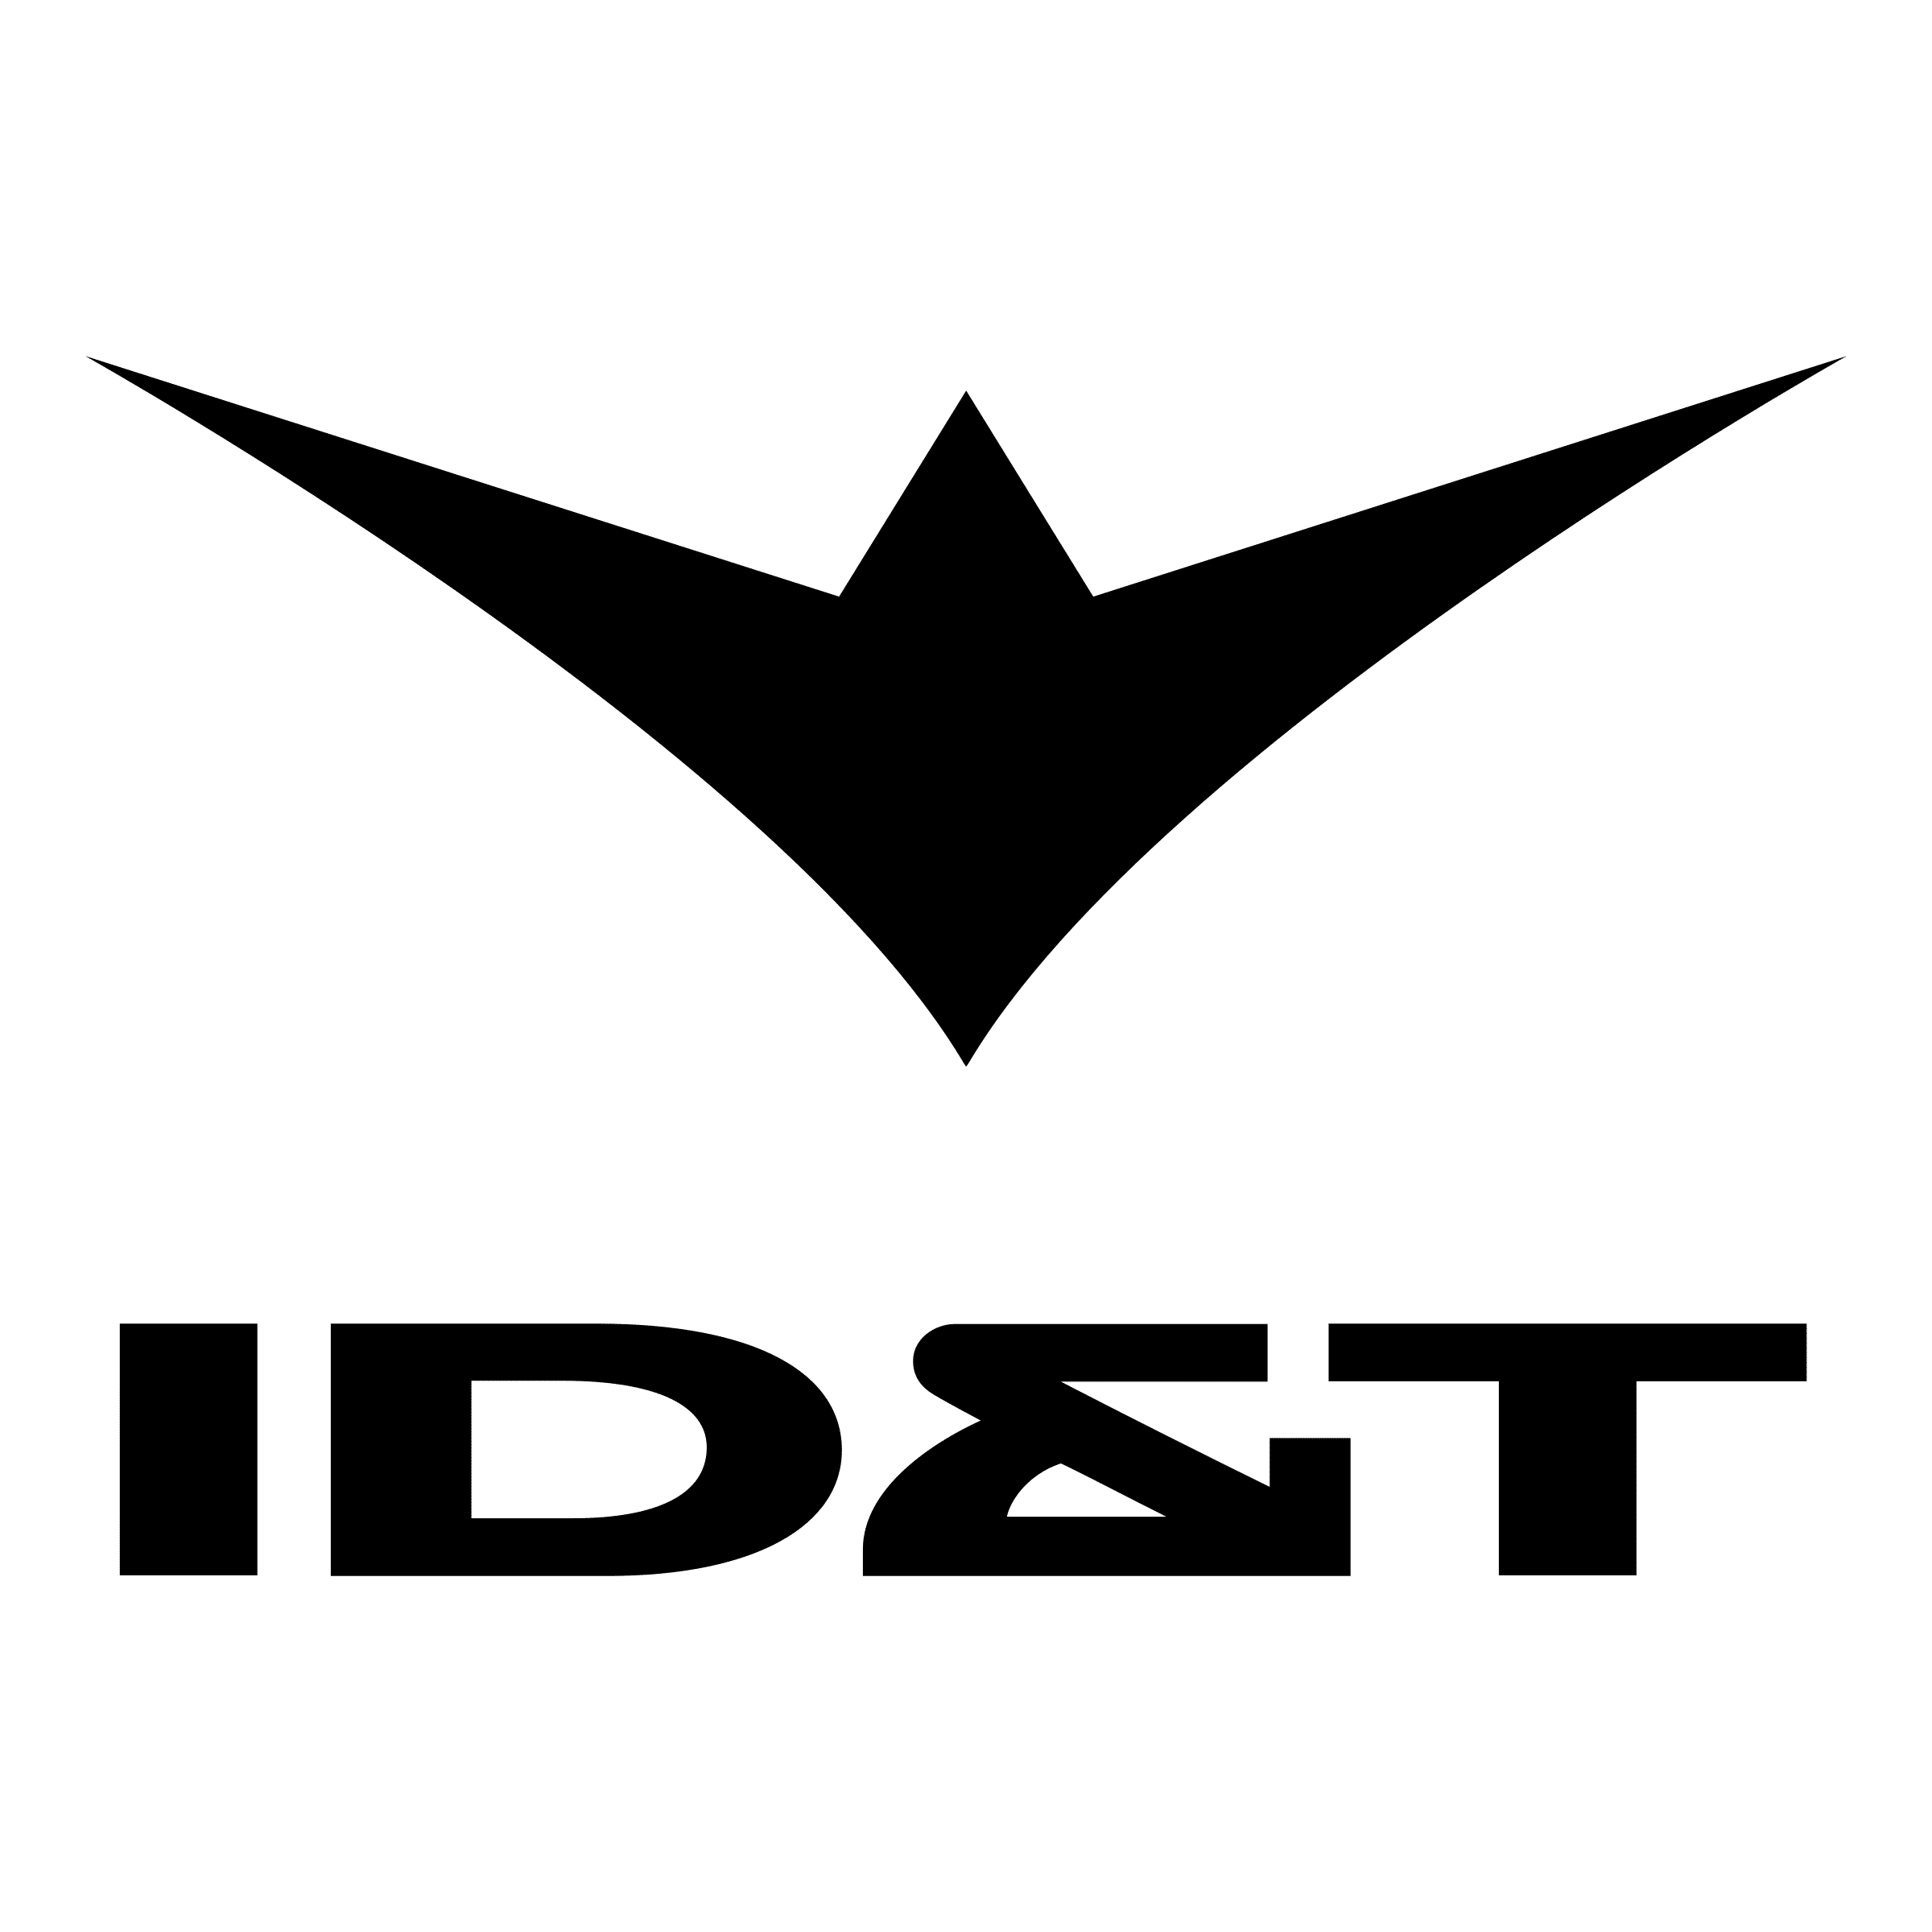 id-t-2-logo-png-transparent